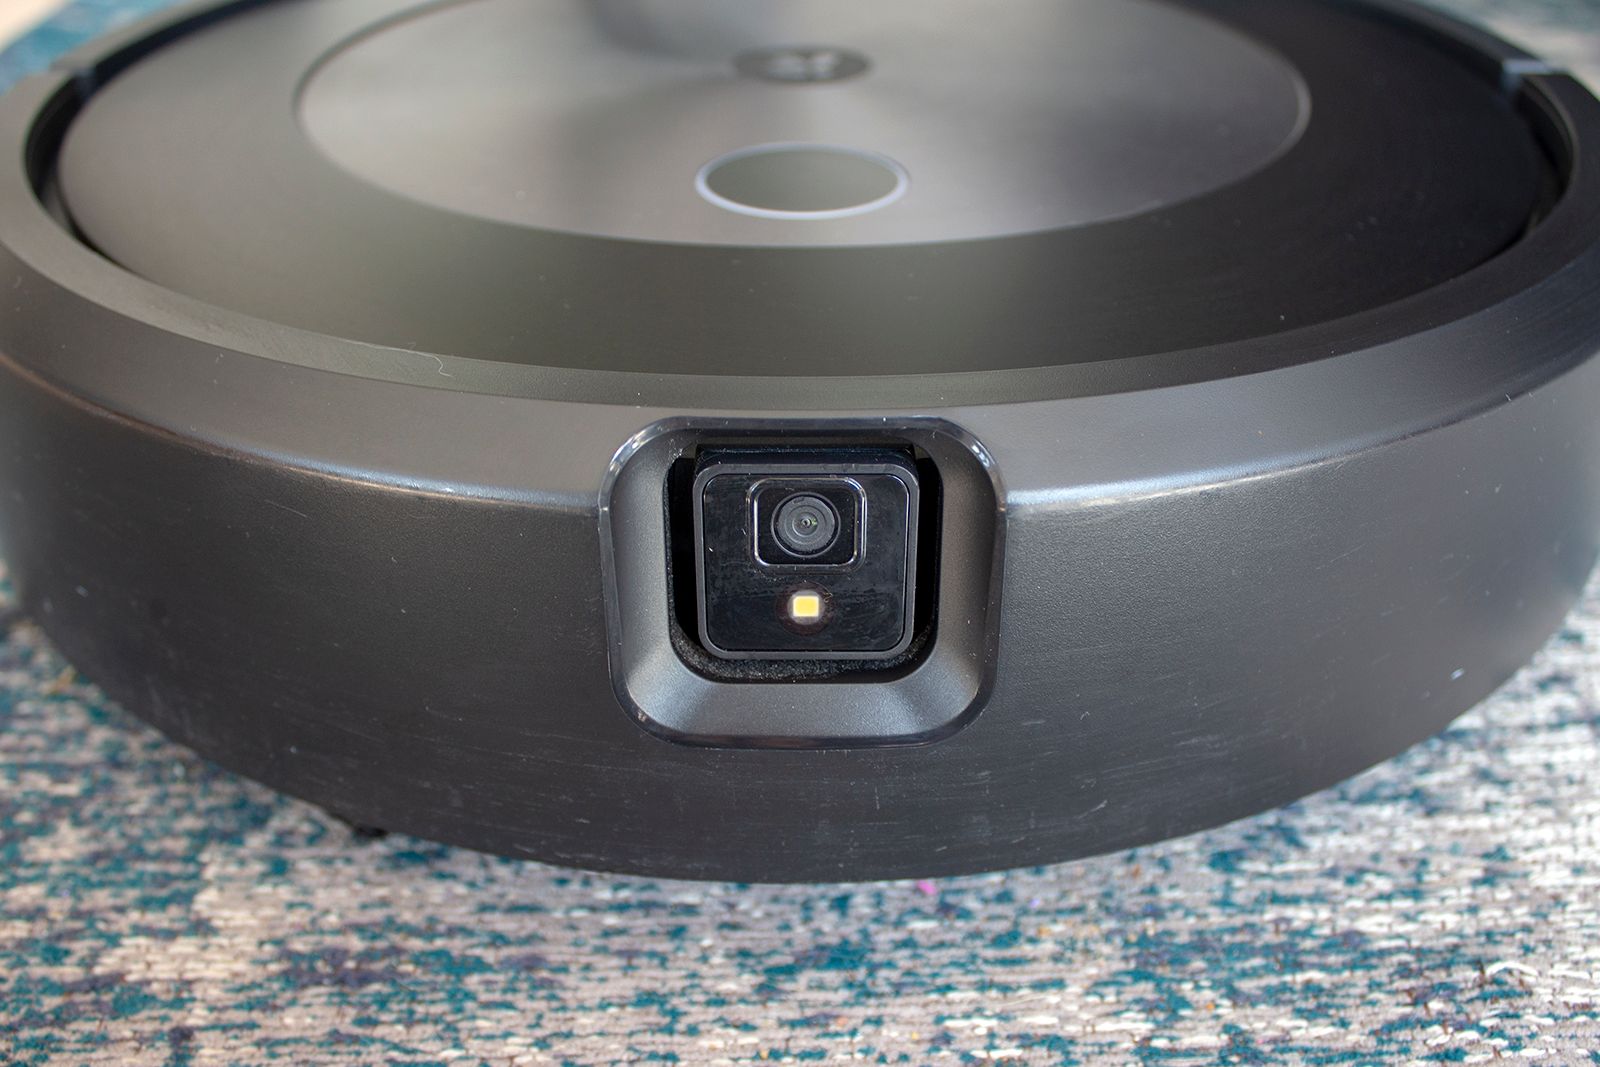 iRobot Roomba J7+ product shots photo 12